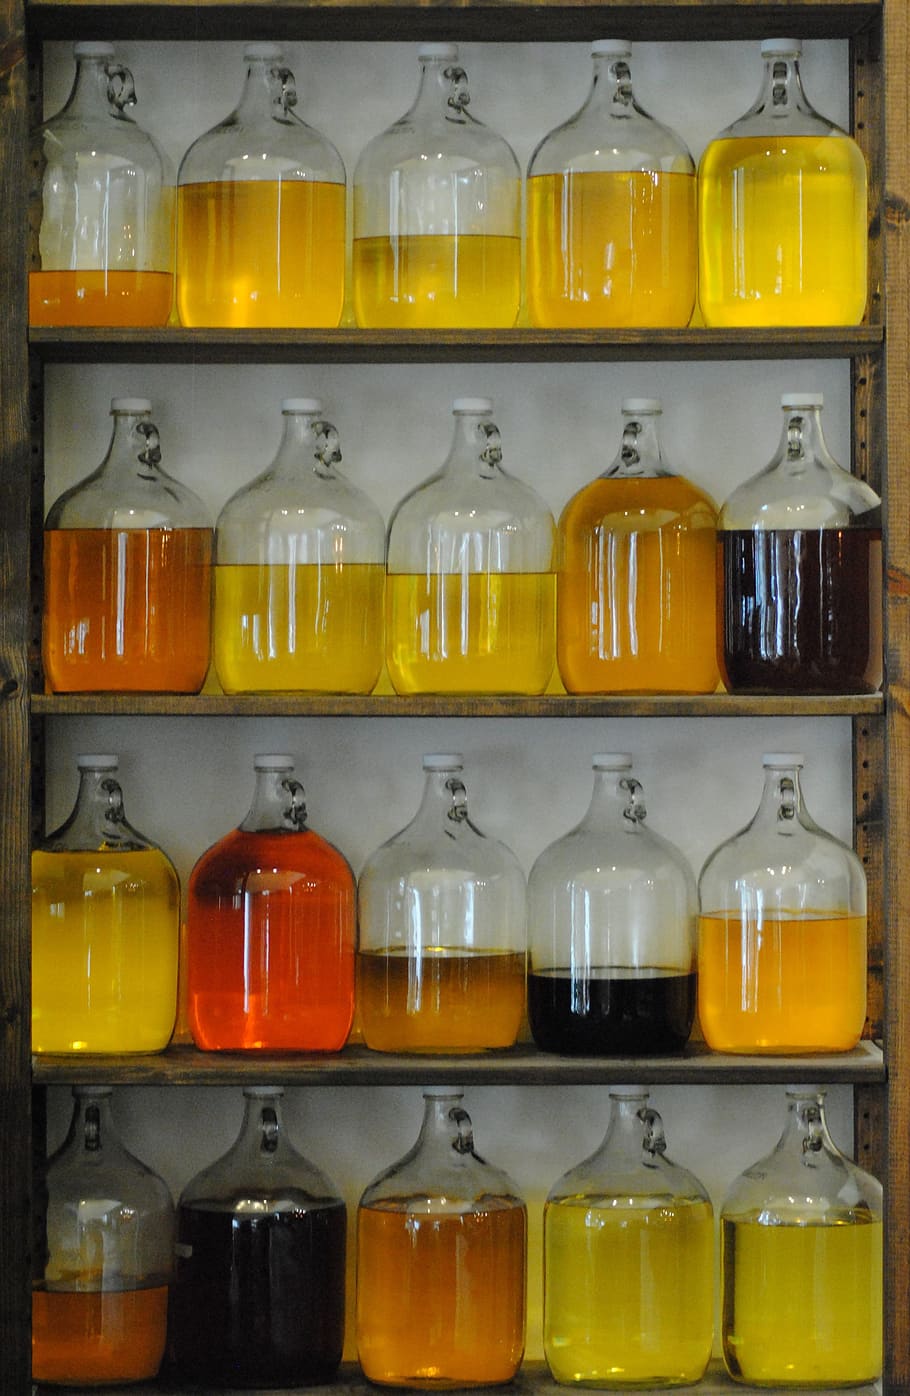 potes, jarros, vidro, boticário, recipiente, óleo, líquido, armazenamento, prateleiras, óleos essenciais